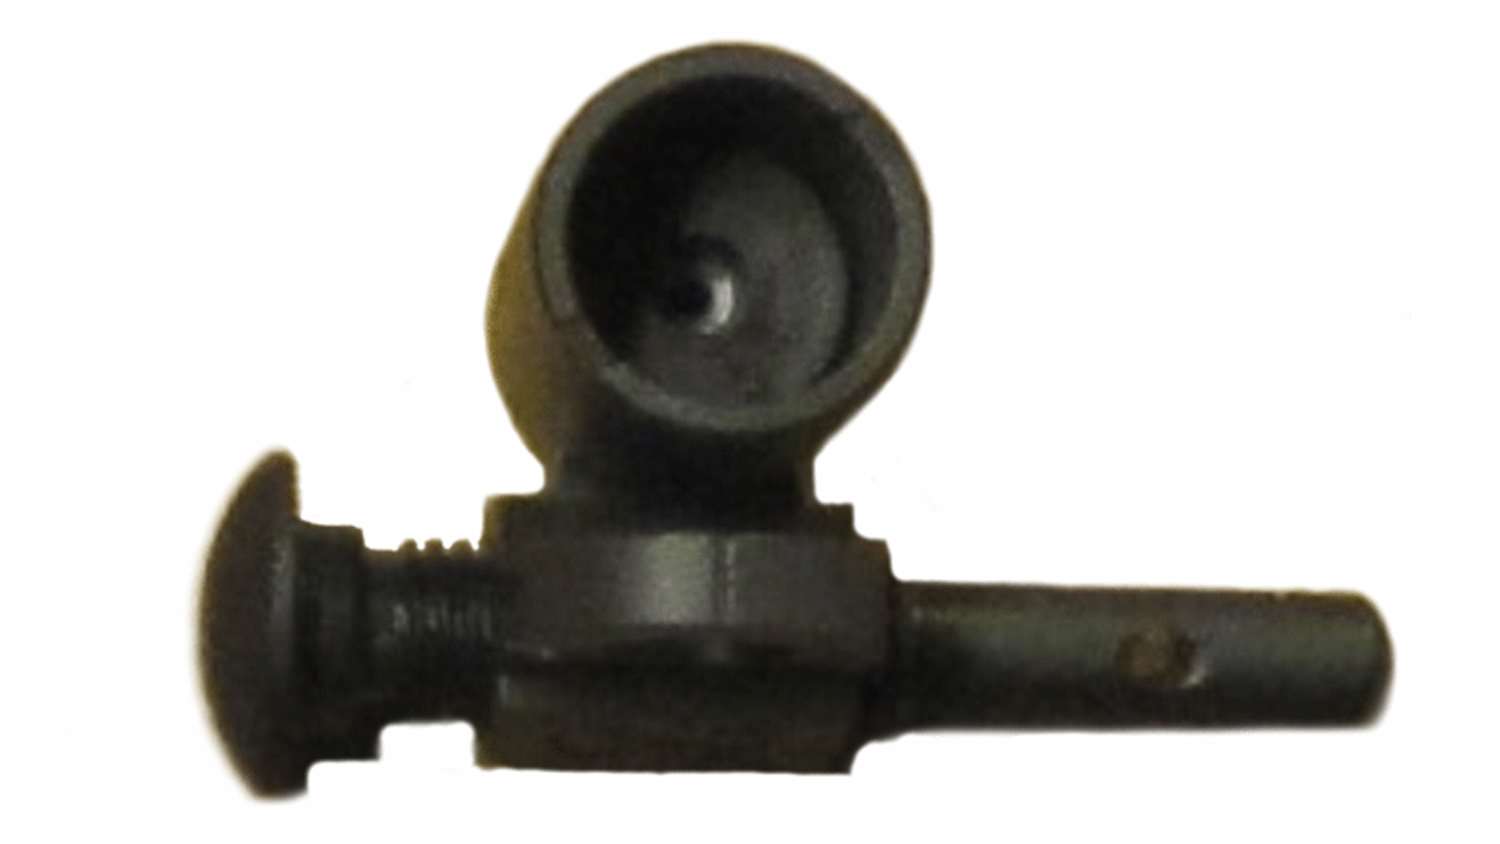 AR-15 National Match rear sight adapter kit